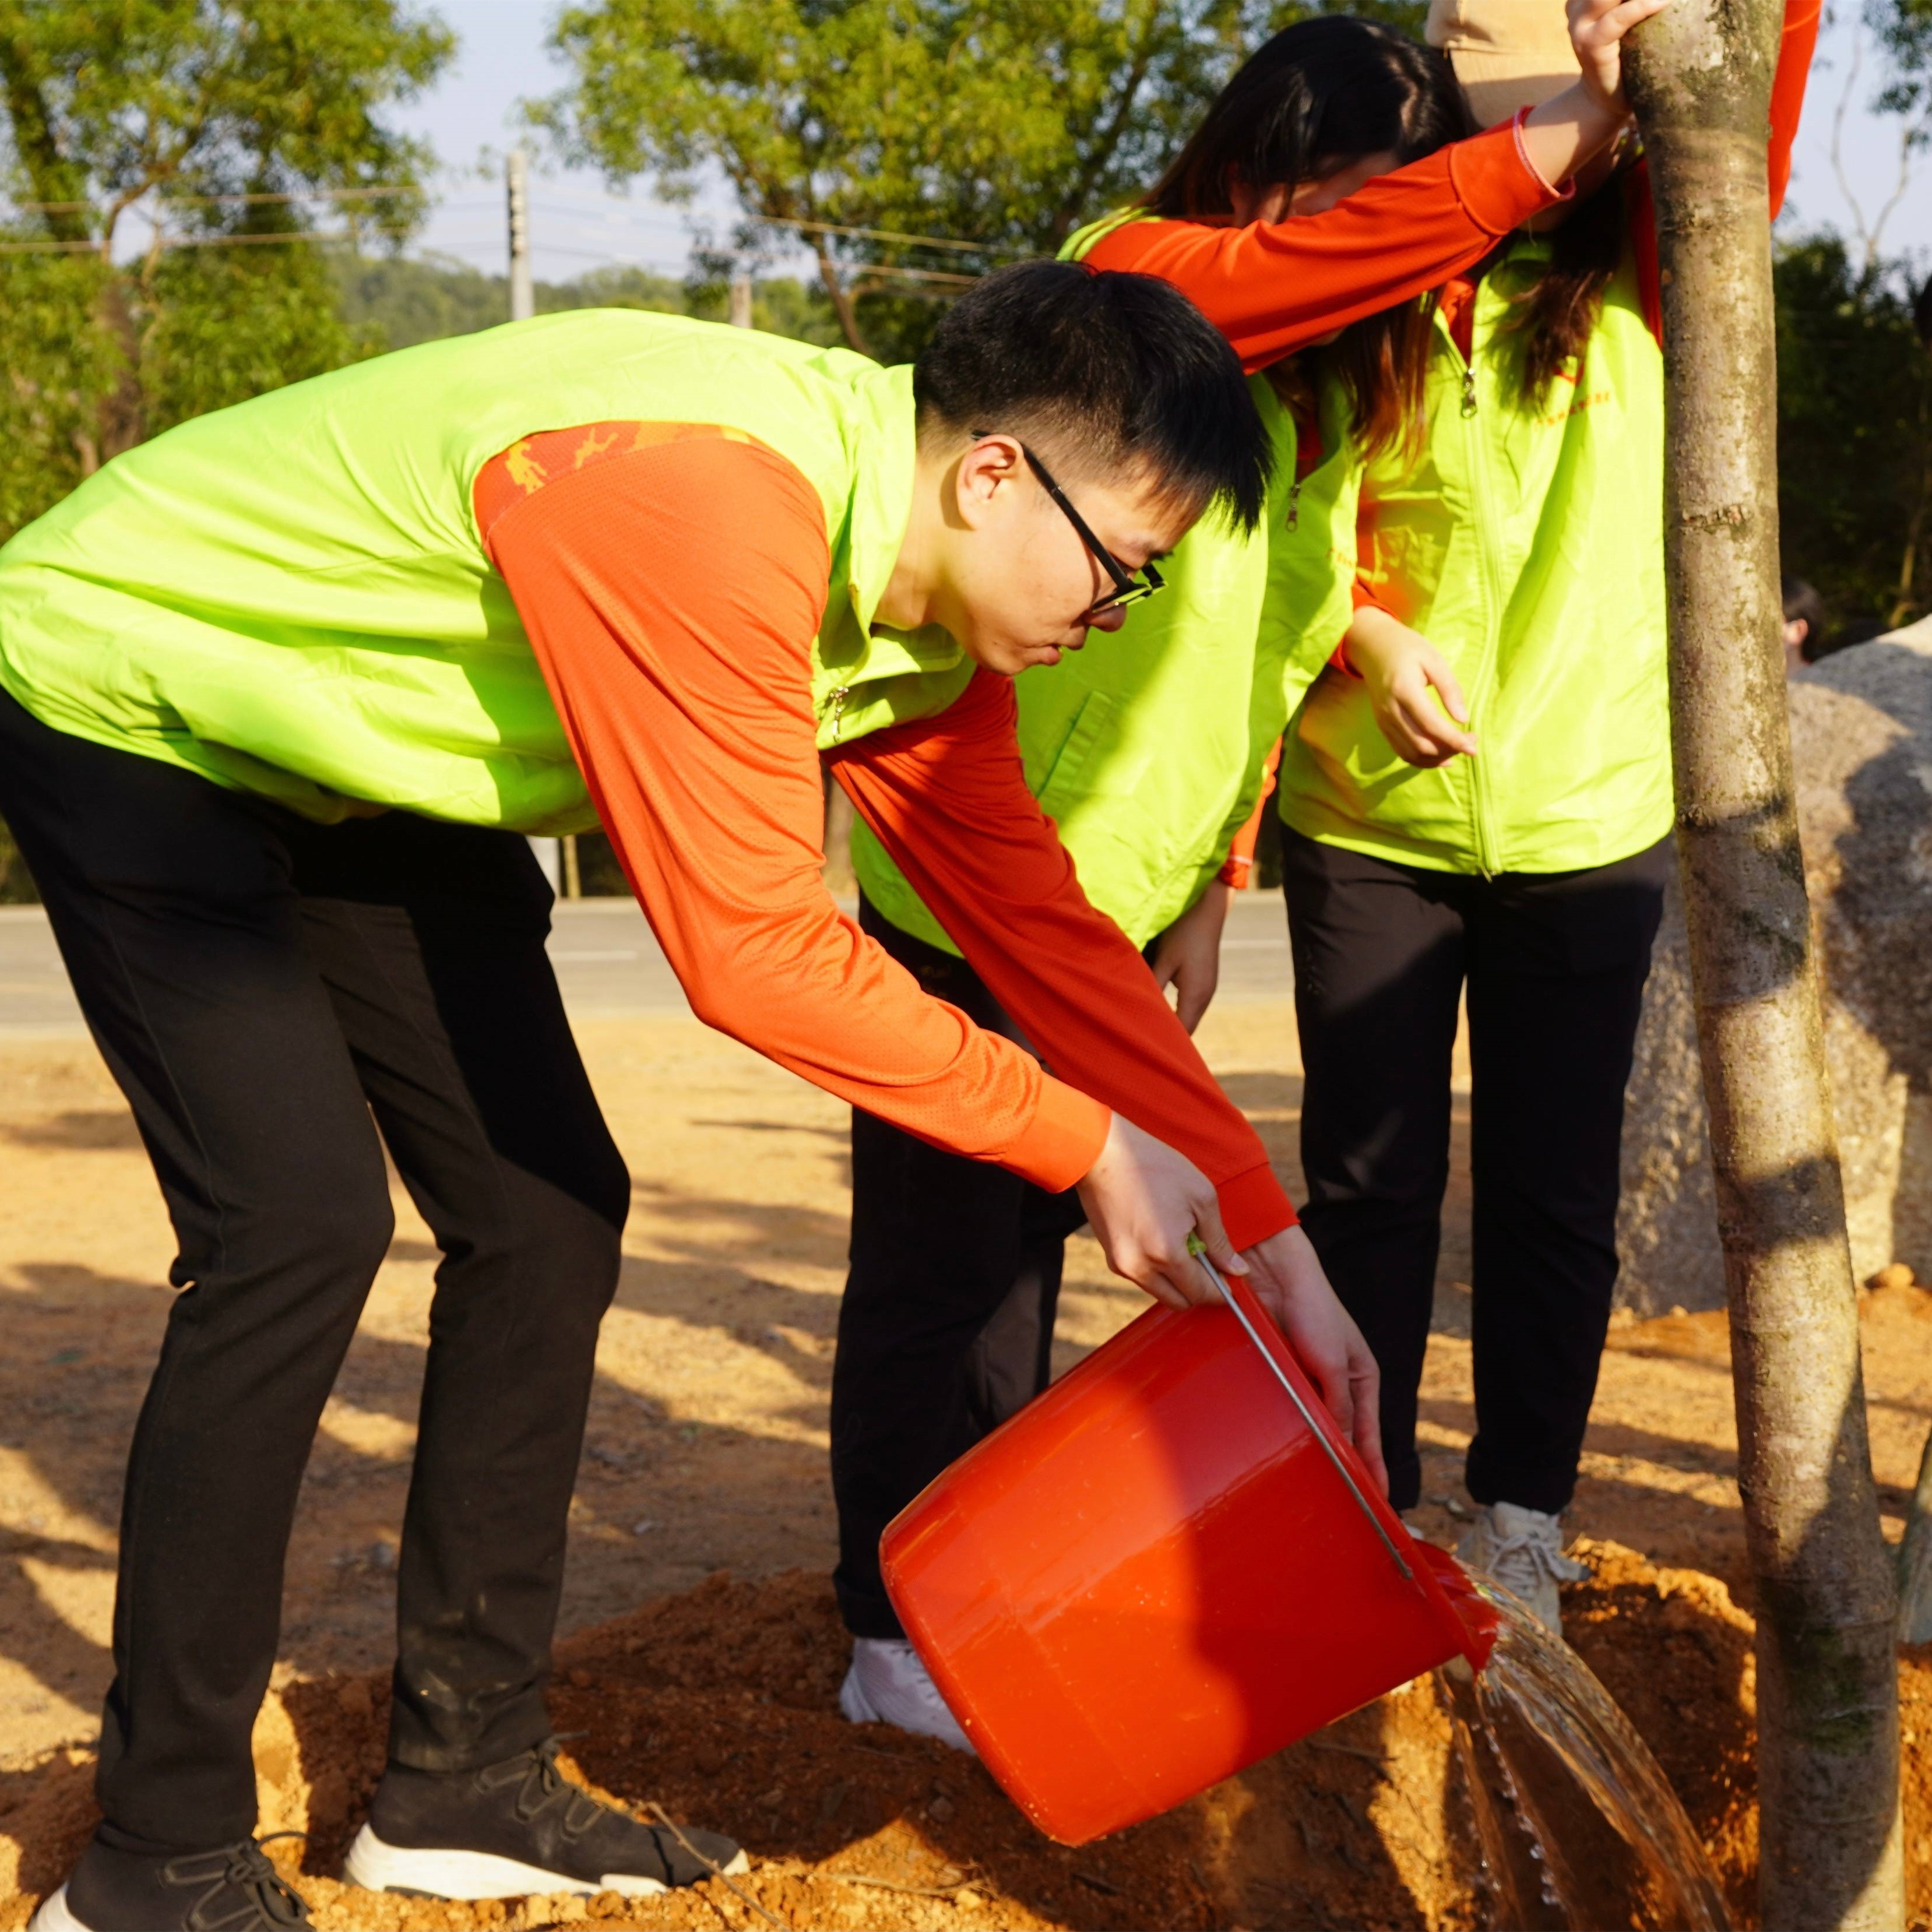 Honhai Technology Company bäitrieden Guangdong Environmental Protection Association South China Botanical Garden Tree Planting Day (2)